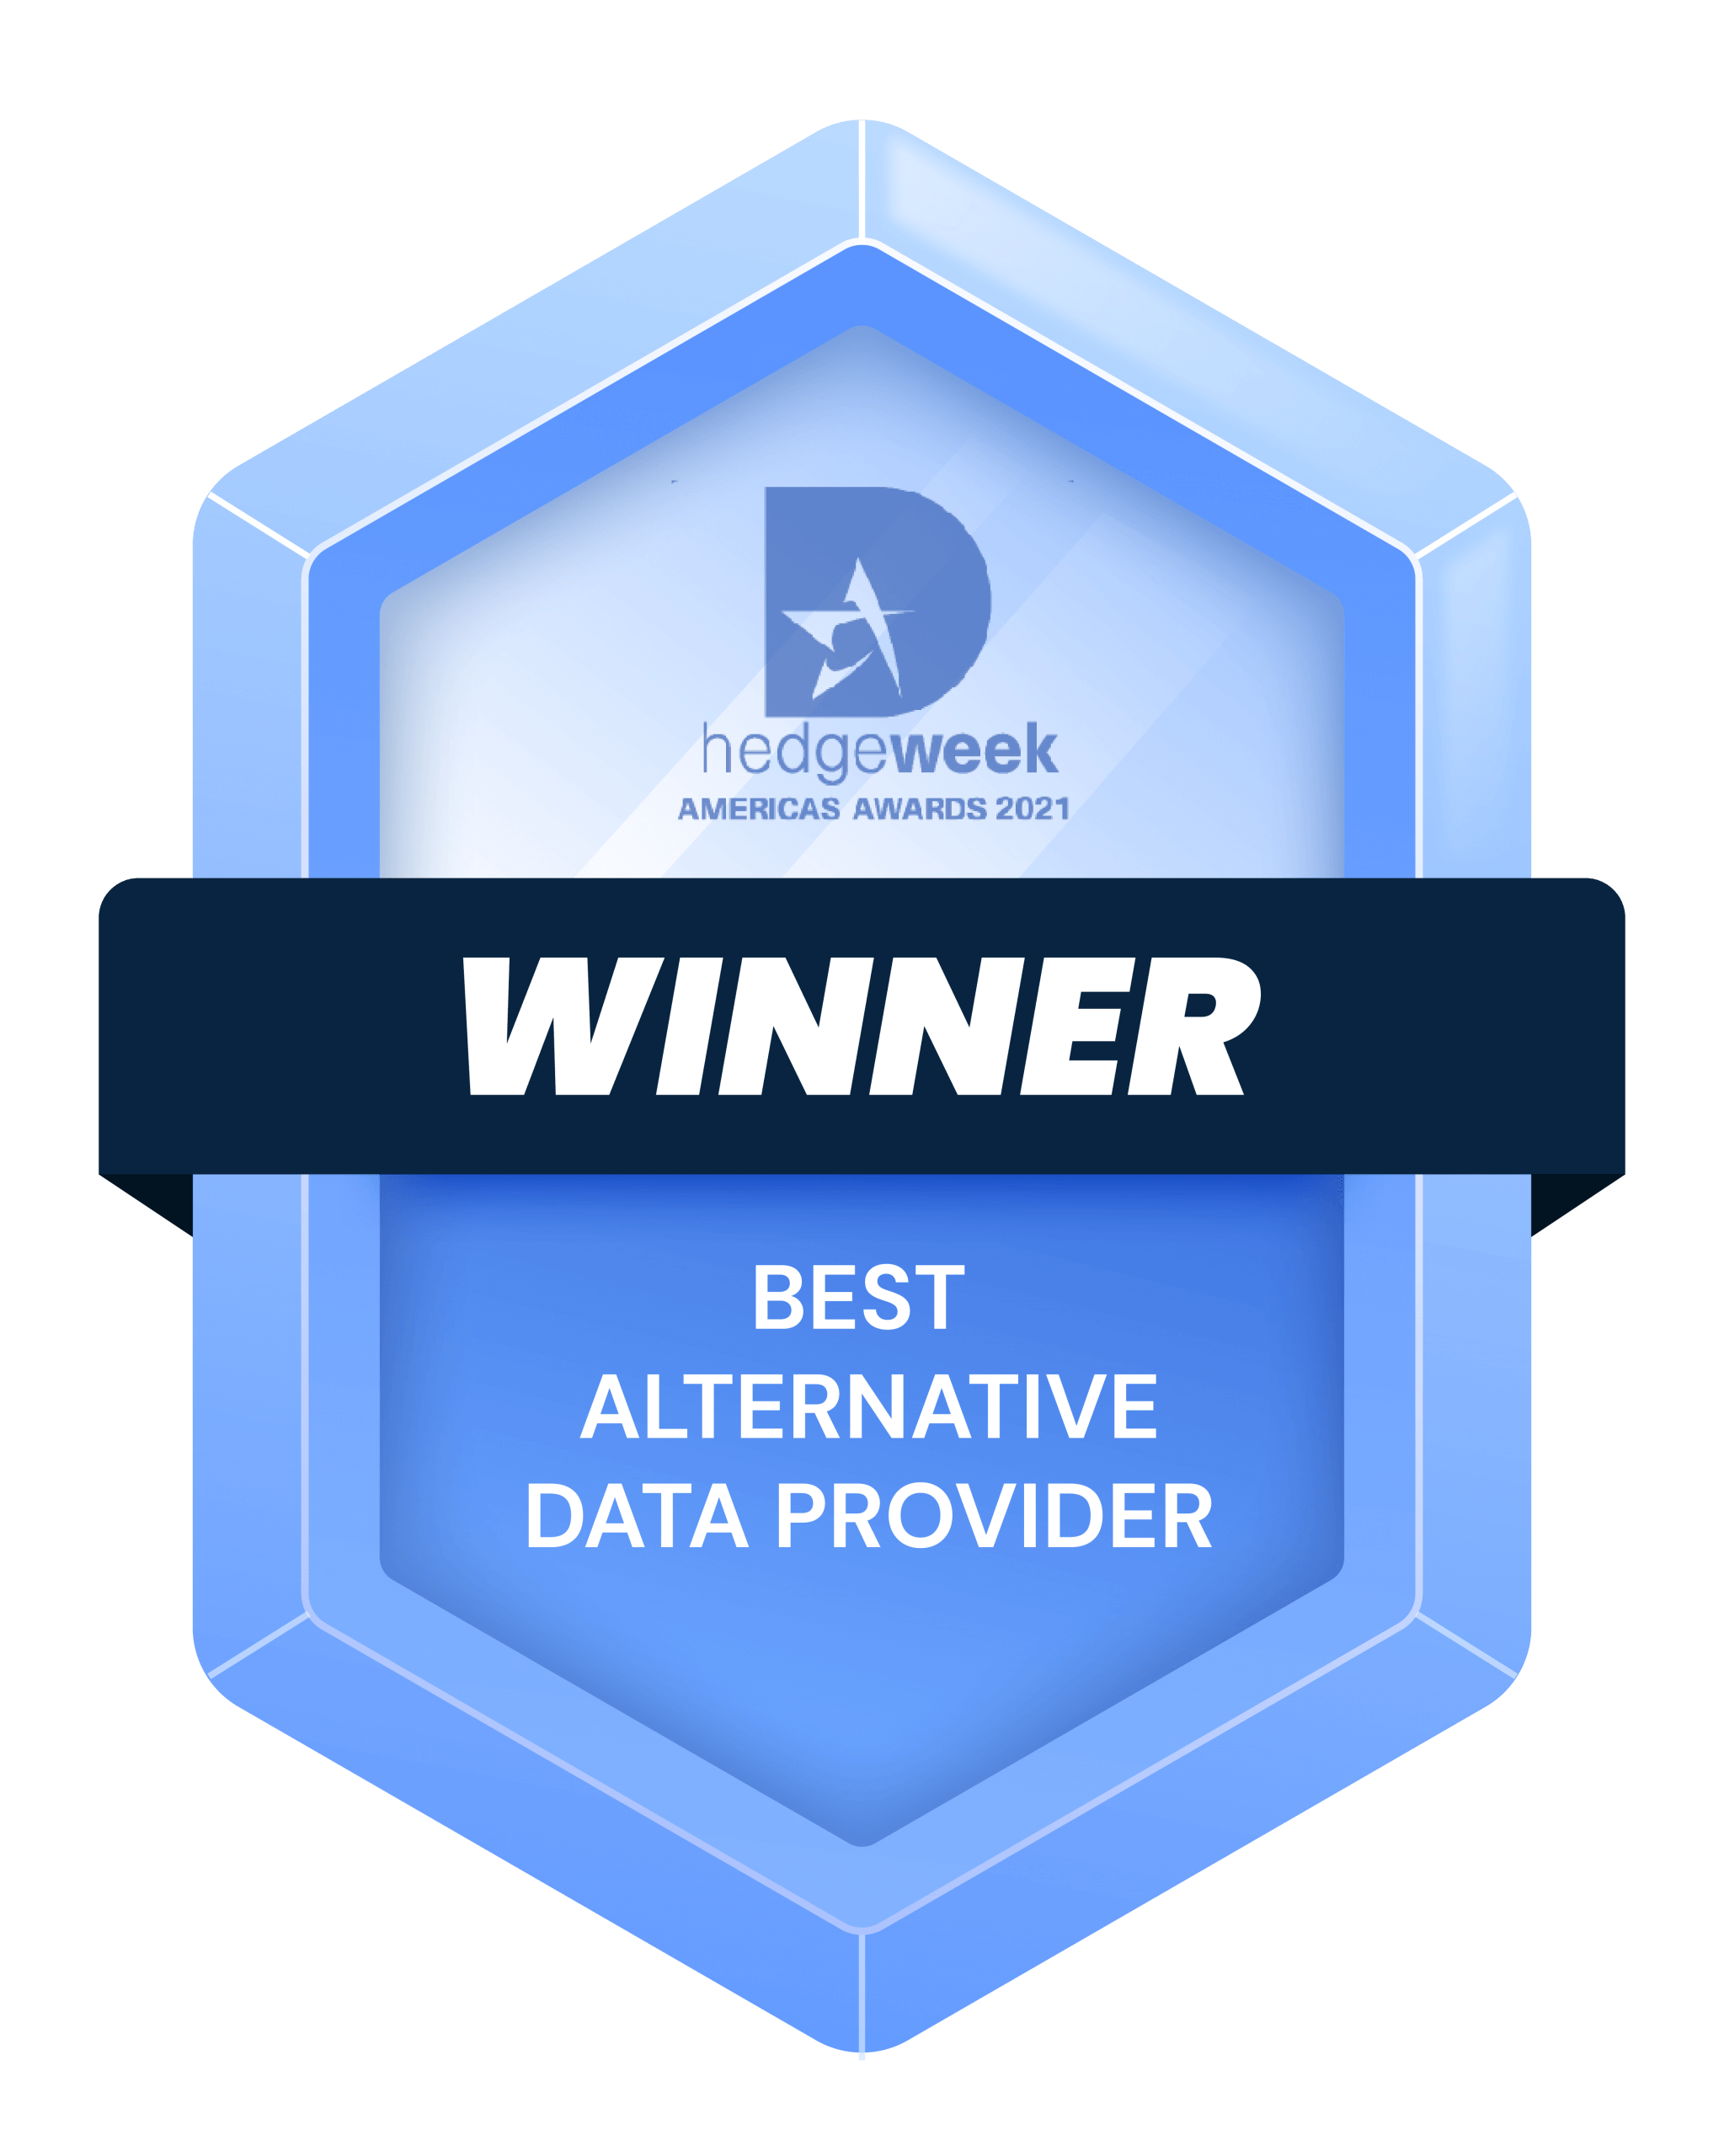 Hedgeweek Amaricas Awards 2021 Winner - Best Alternative Data Provider